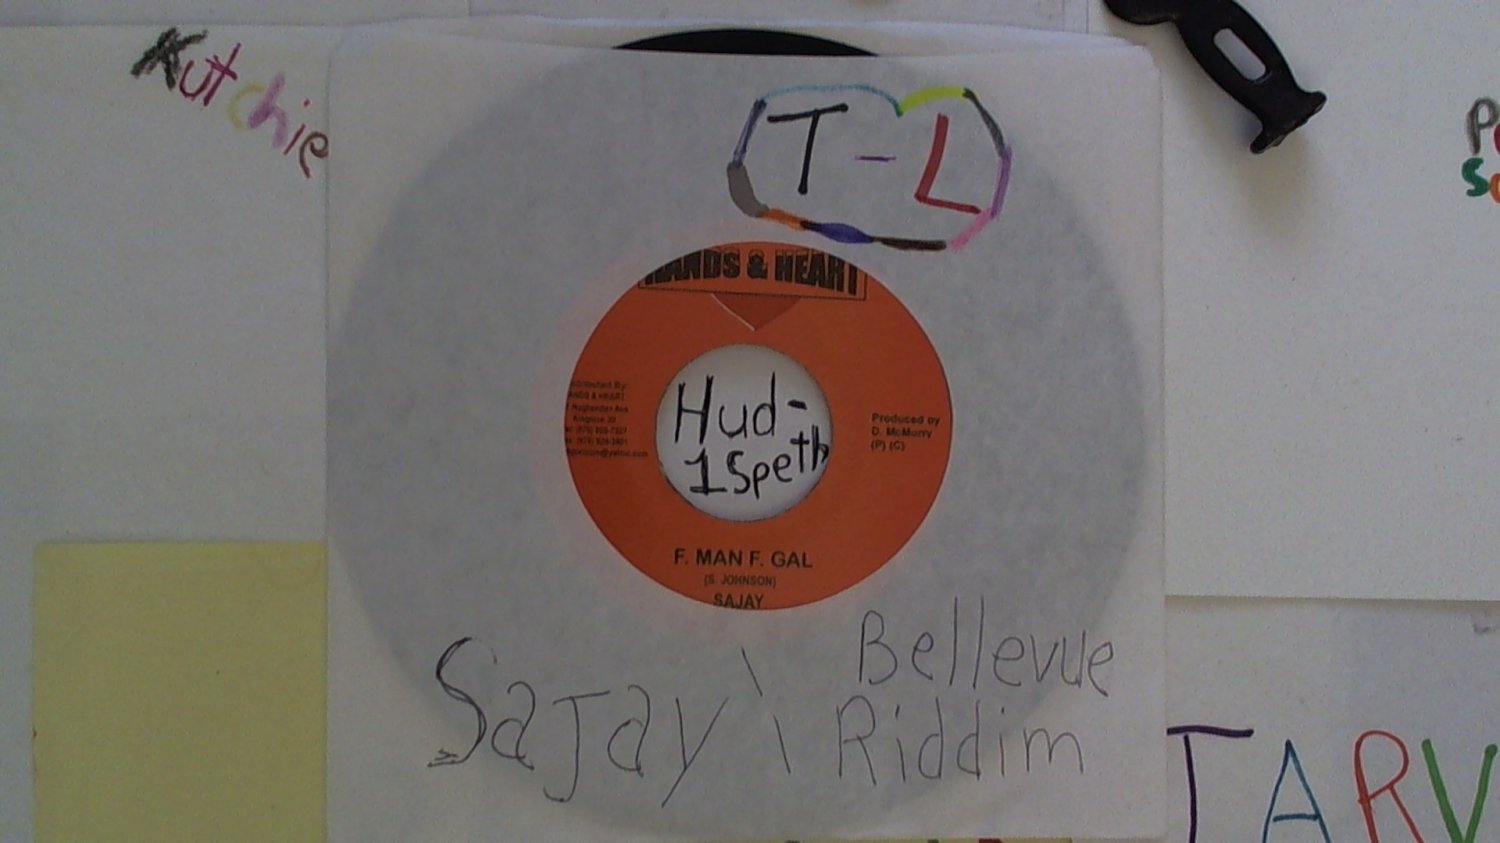 artiste: Sayjay side A: F. Man F. Gal / B: Bellevue Riddim label: Hands & Heart (Used) 7"